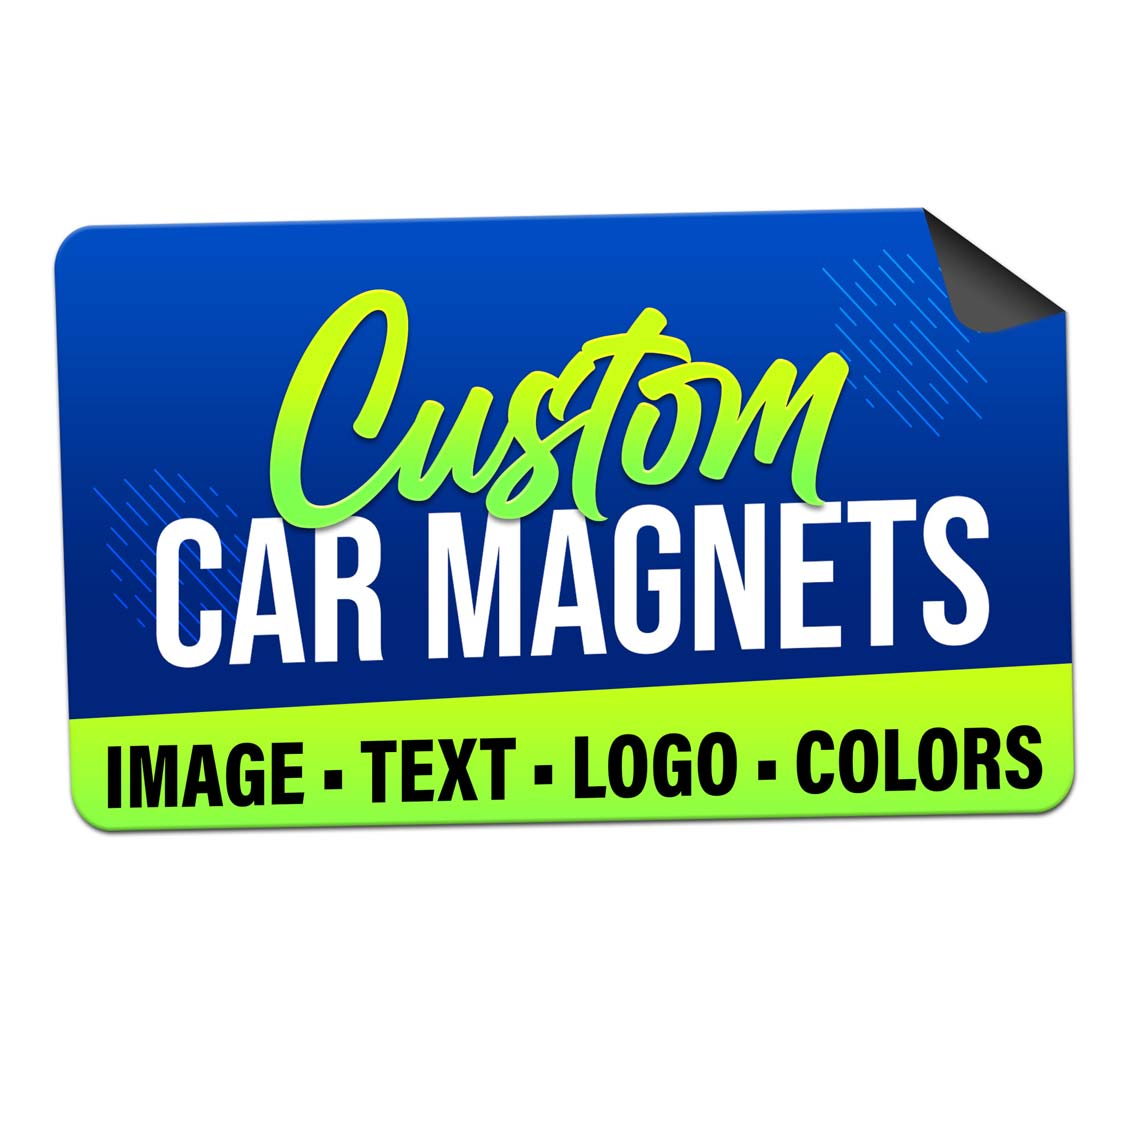 Car Magnet